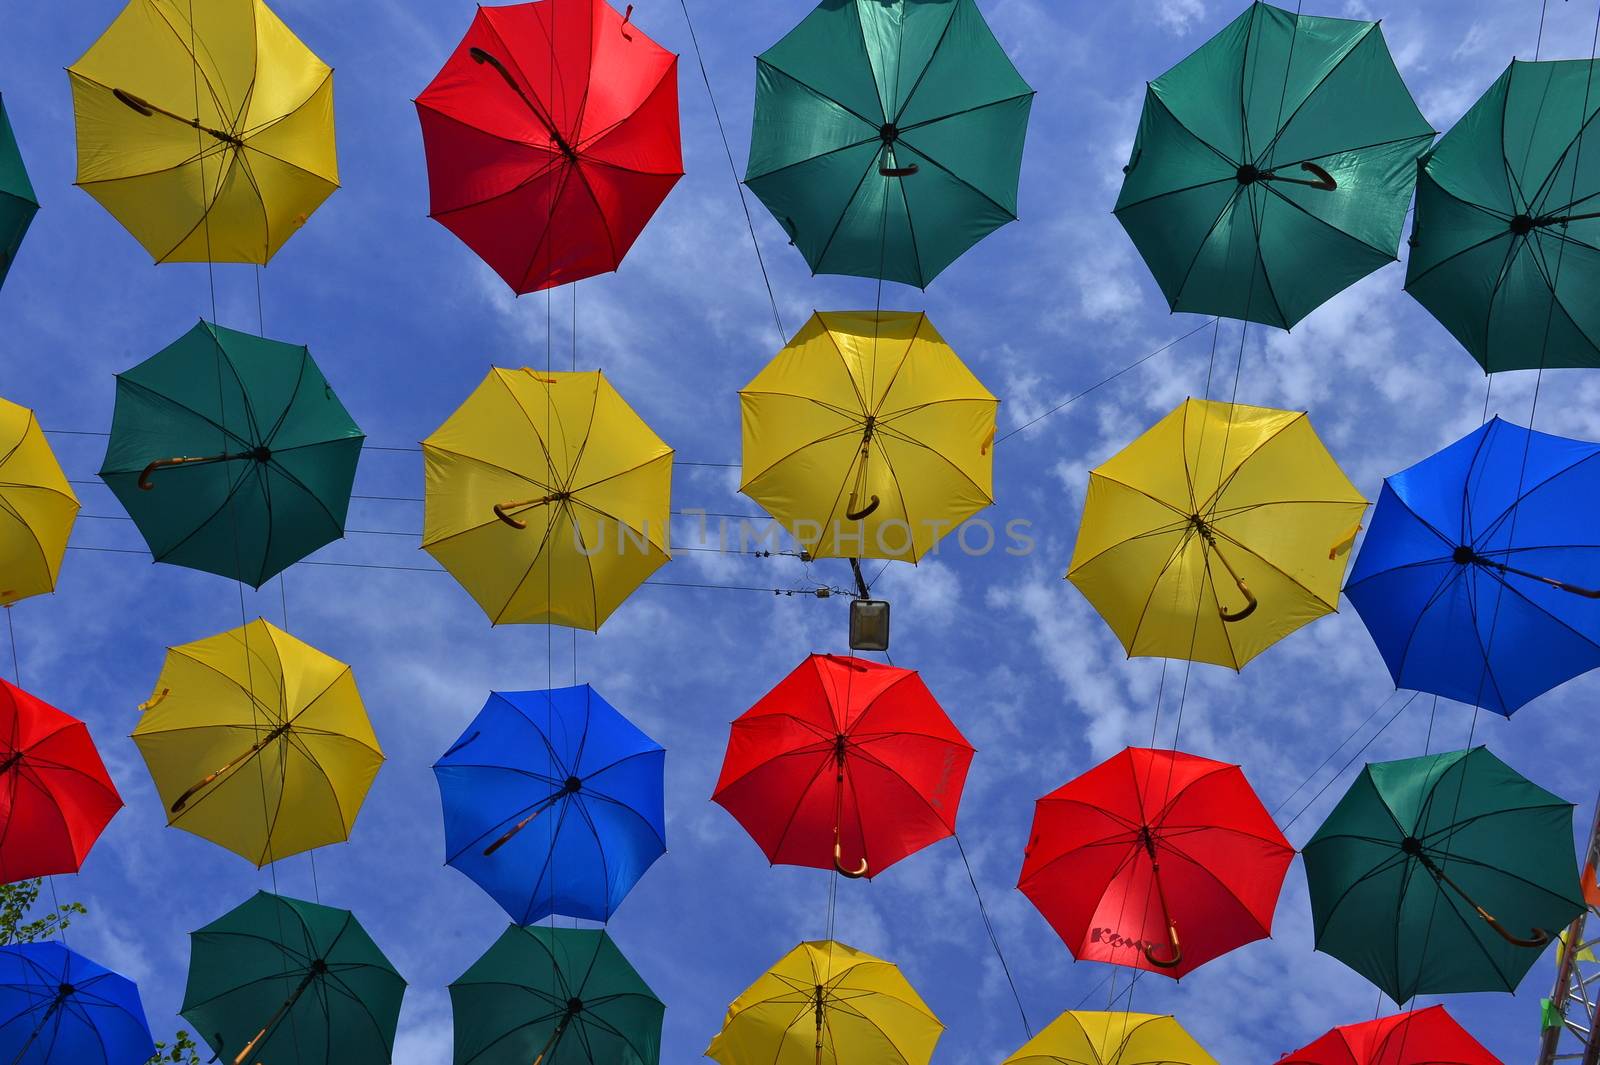 Lots of umbrellas coloring the sky in the Saint Petersburg Russia